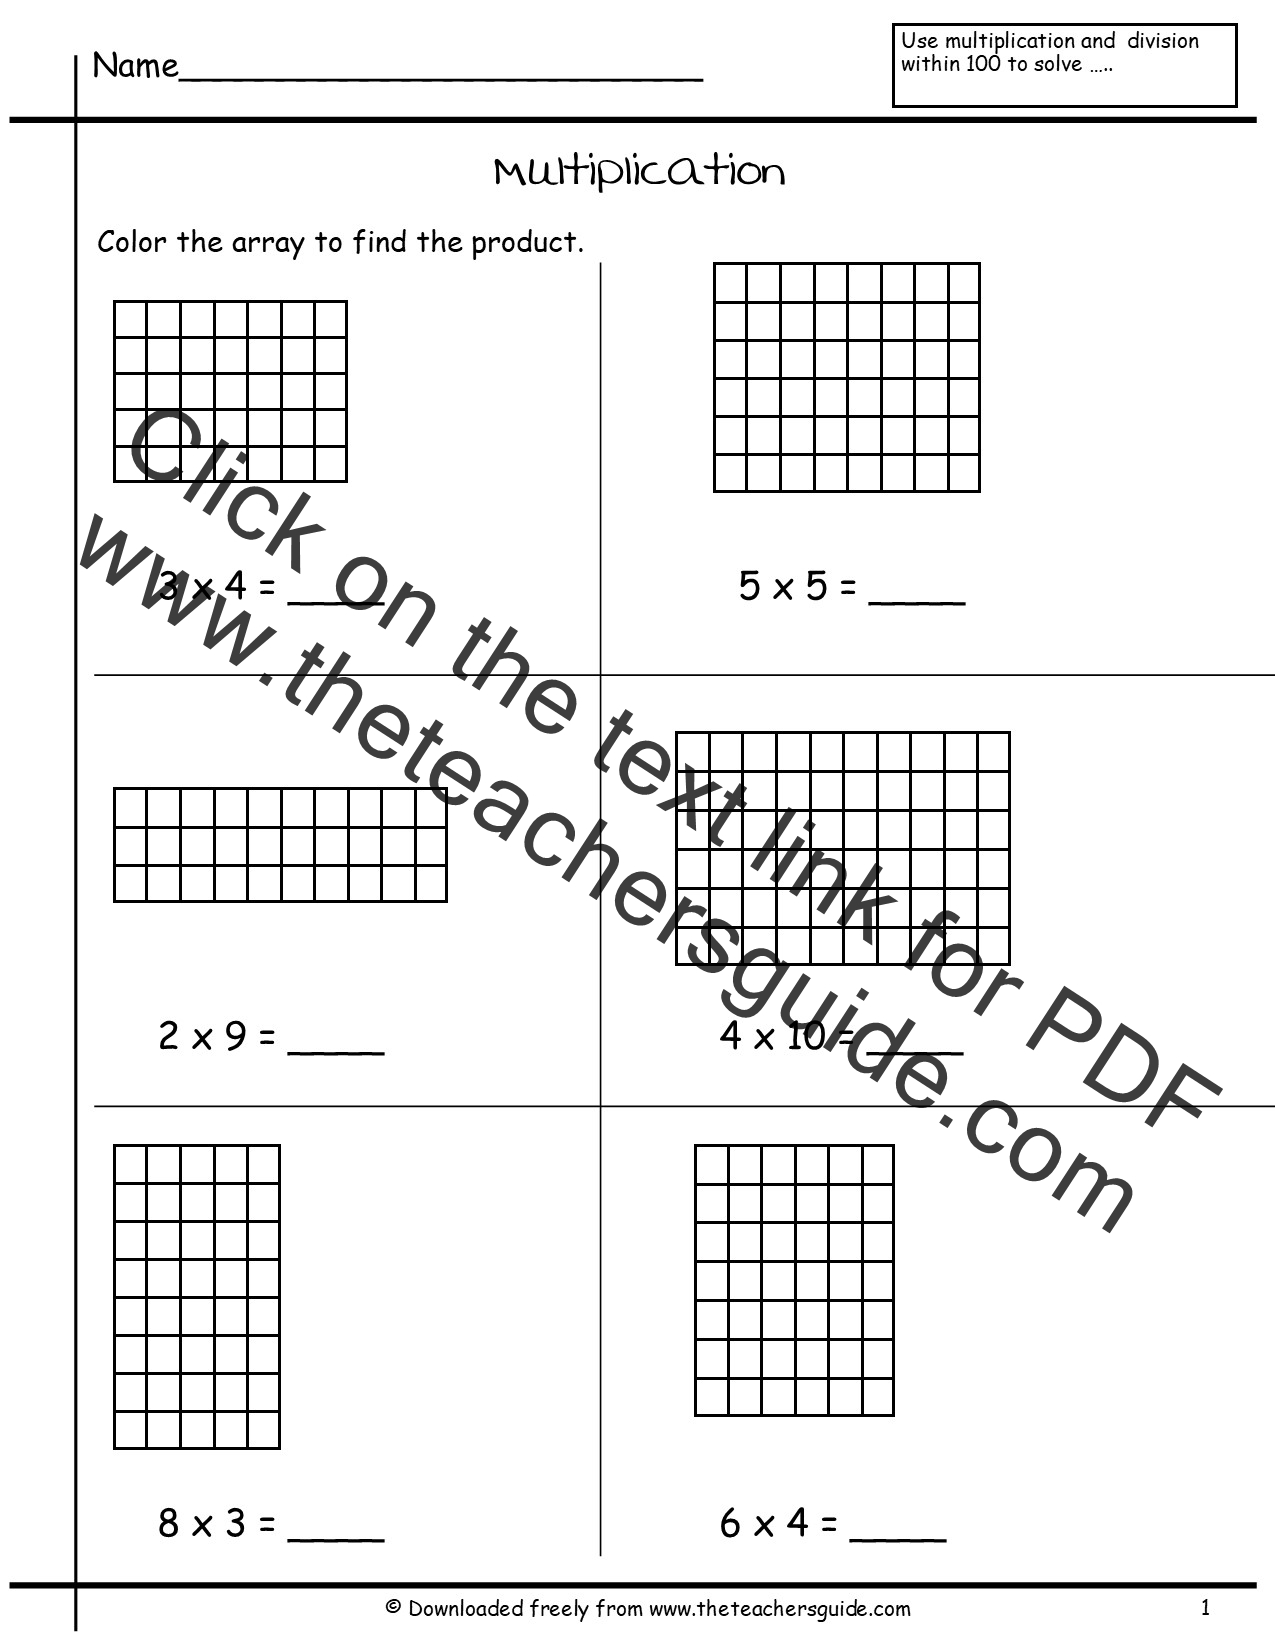 image-result-for-multiplication-array-worksheets-3rd-grade-3rd-grade-math-multiplication-2nd